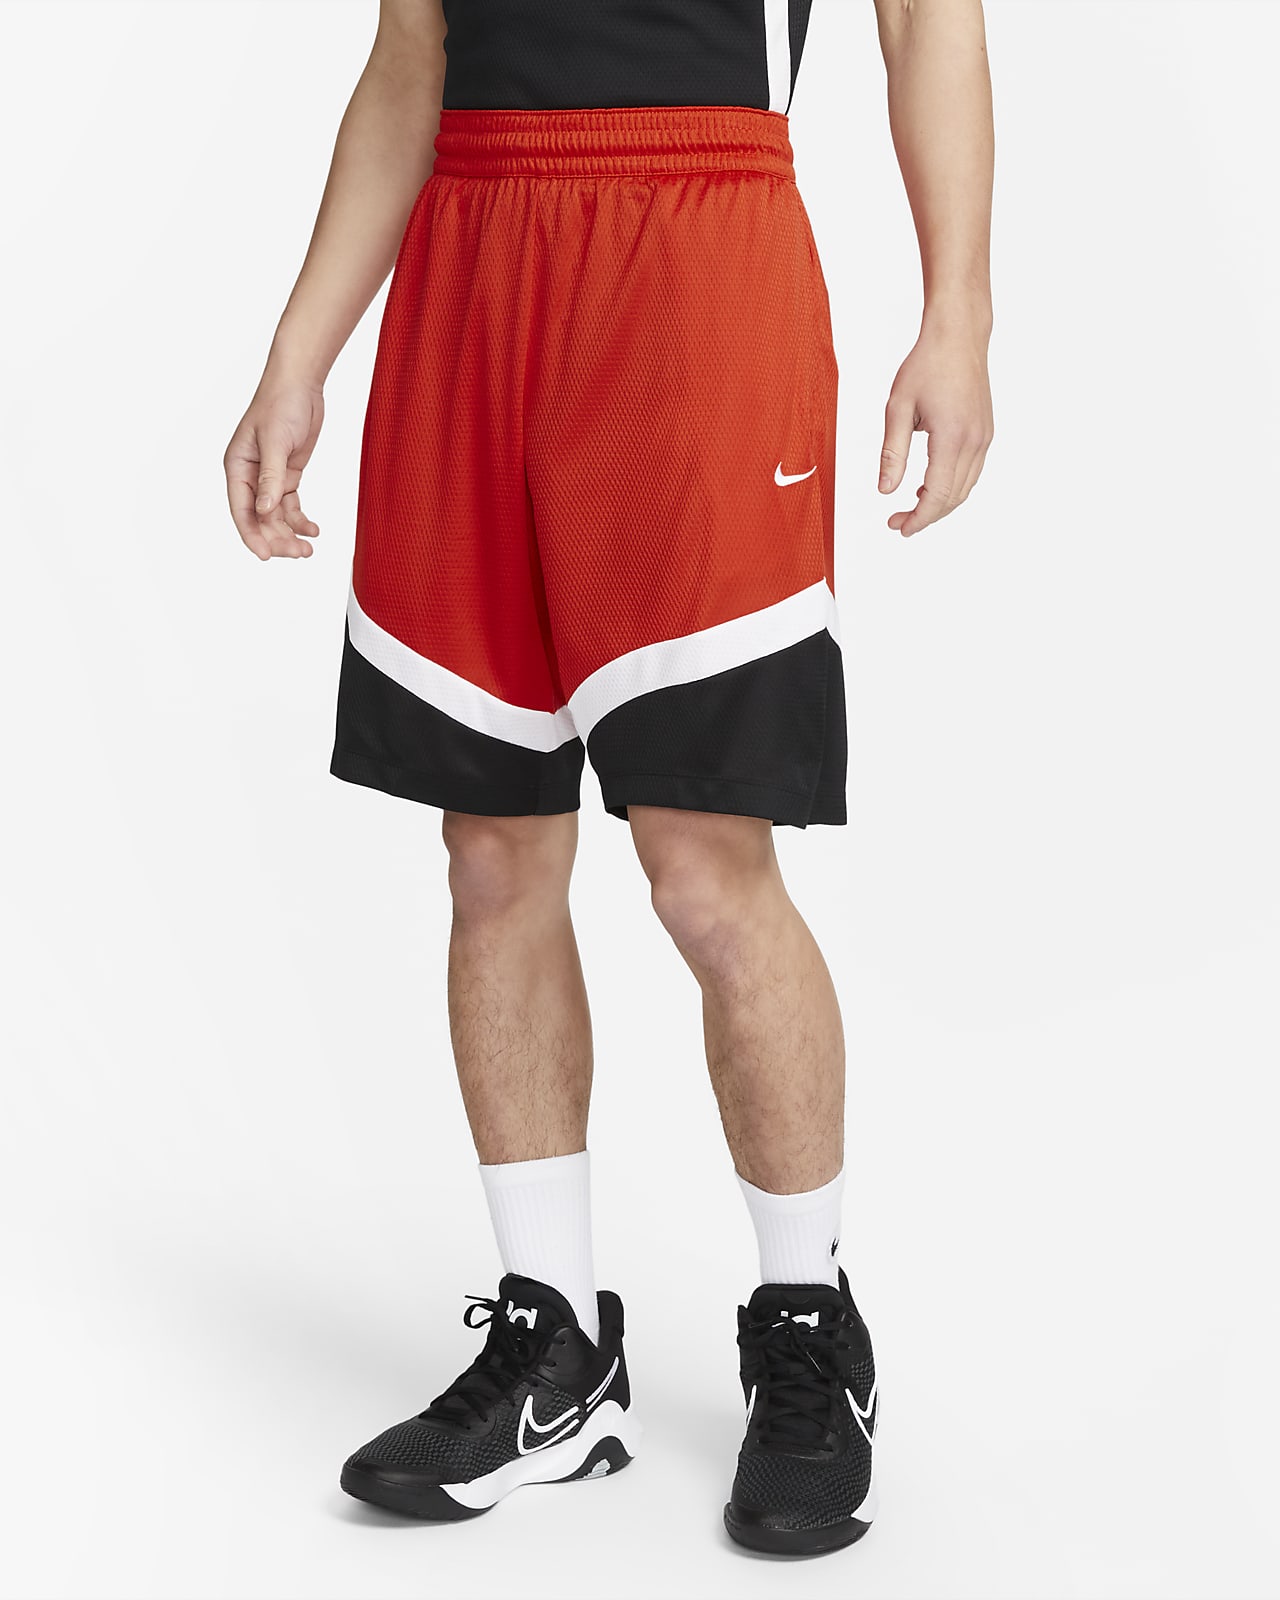 Nike Dri-FIT Icon Men's 28cm (approx.) Basketball Shorts